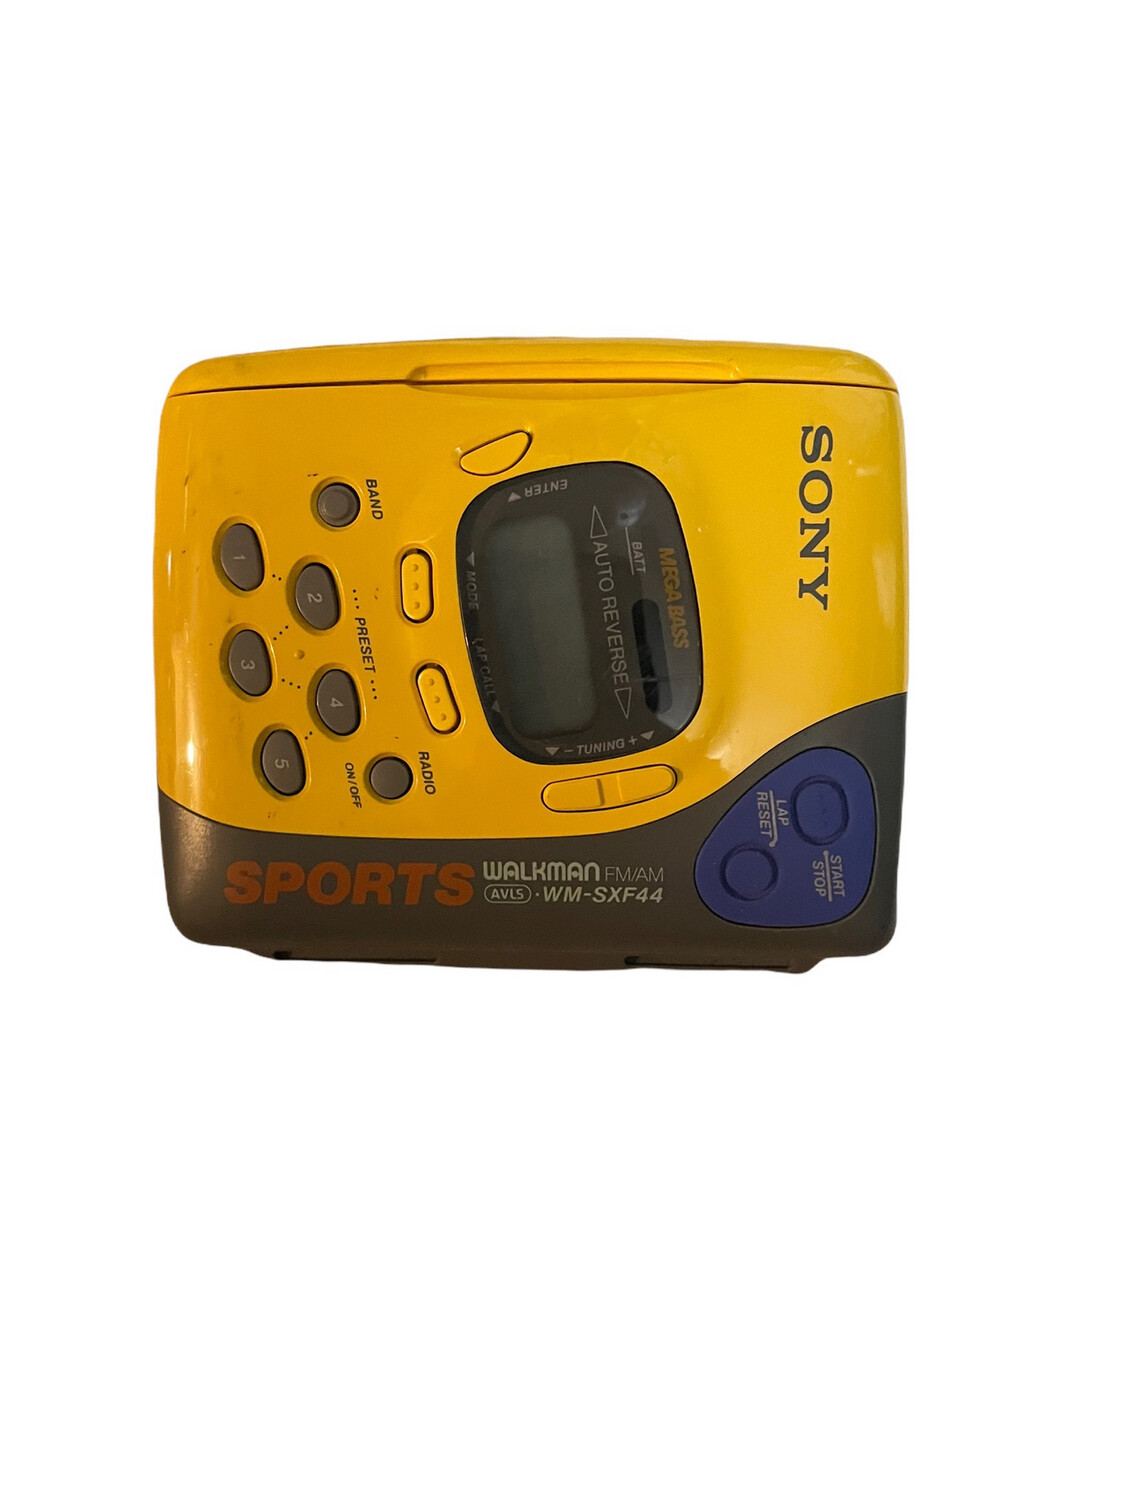 Sony Sports WM-SXF44 AM/FM Cassette Walkman - ( Preowned) tested